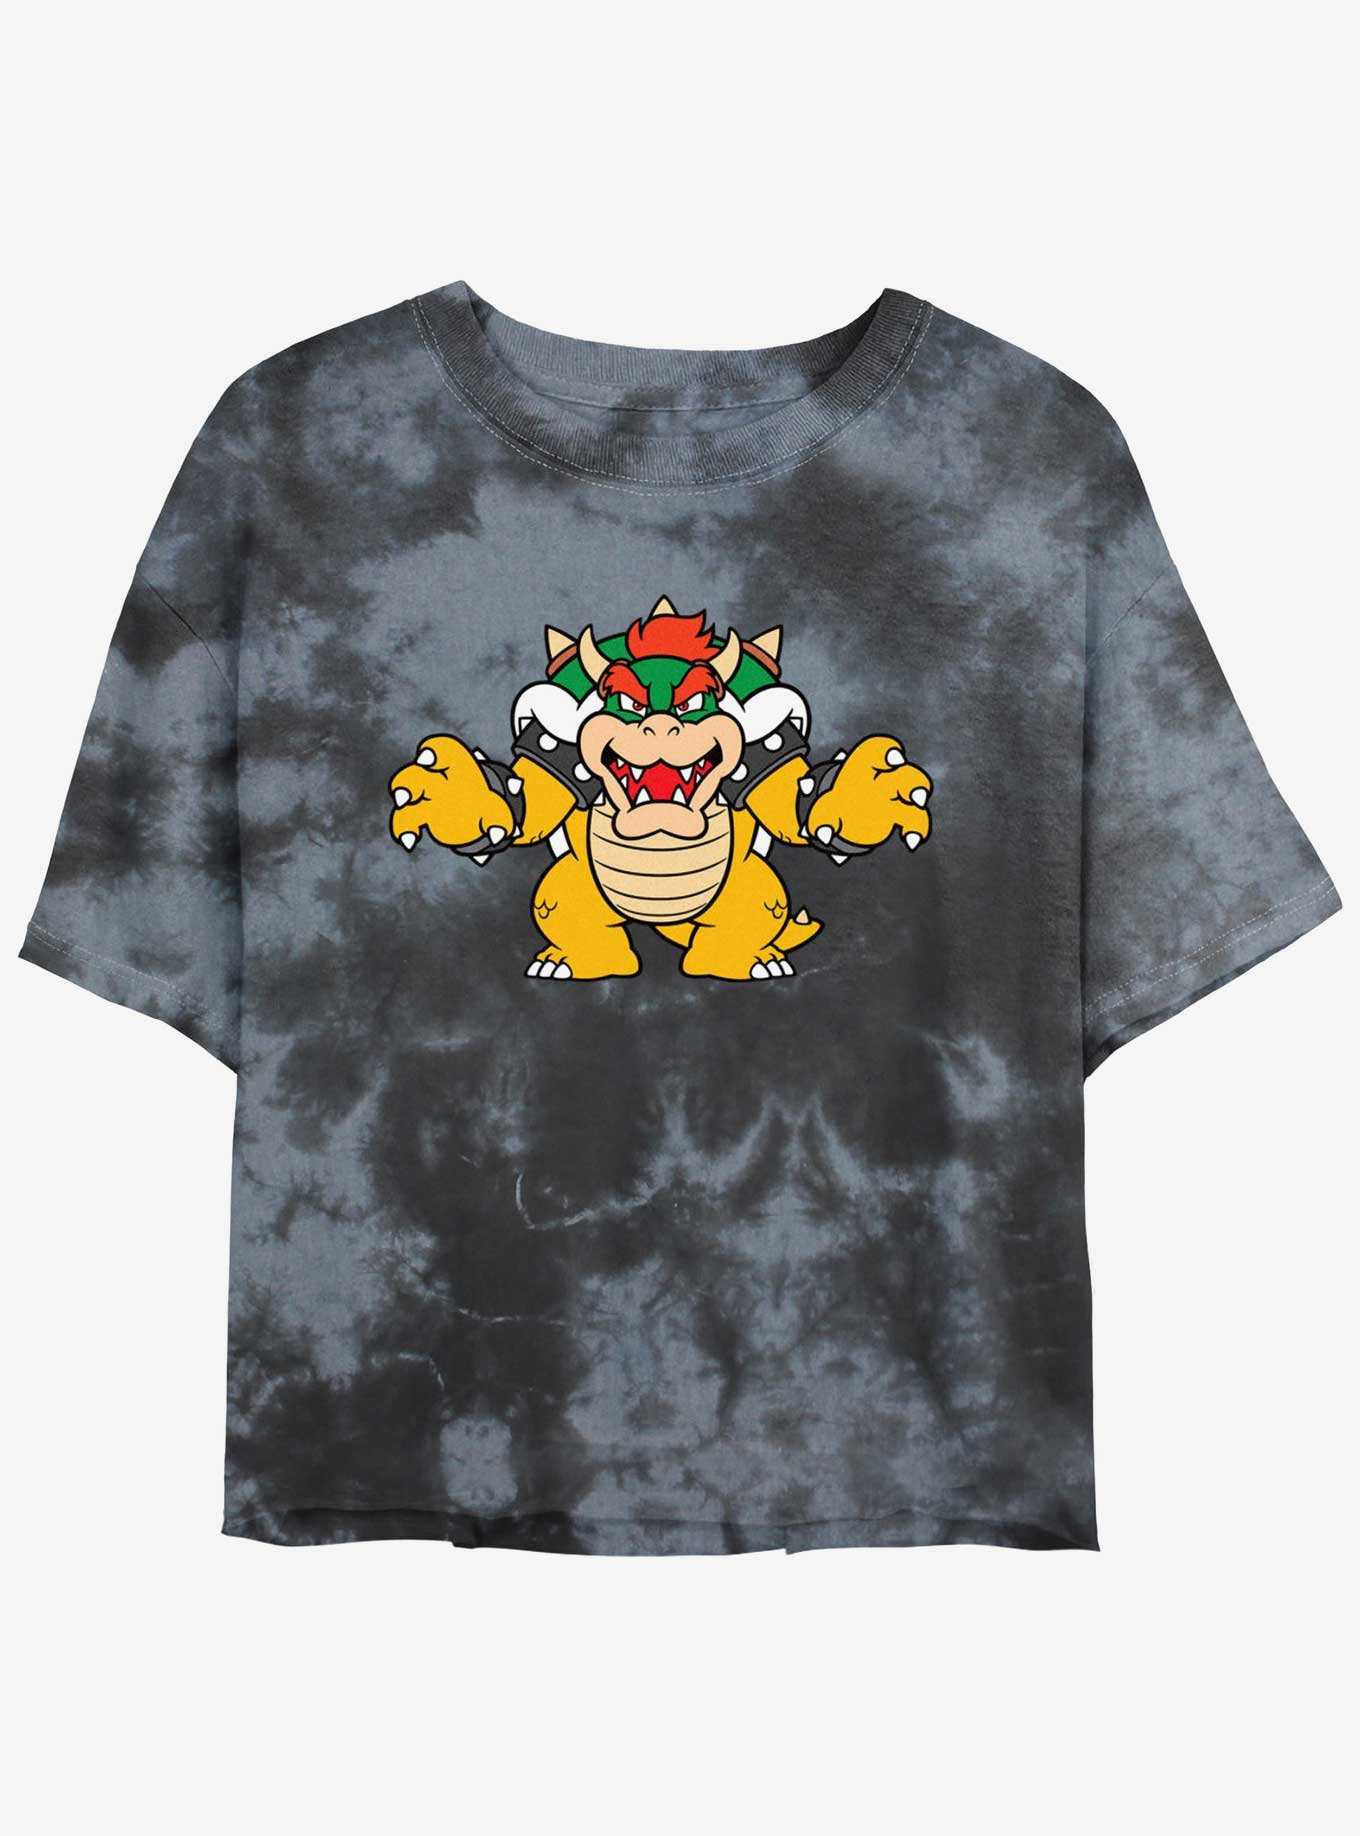 Nintendo Mario Just Bowser Tie-Dye Girls Crop T-Shirt, , hi-res